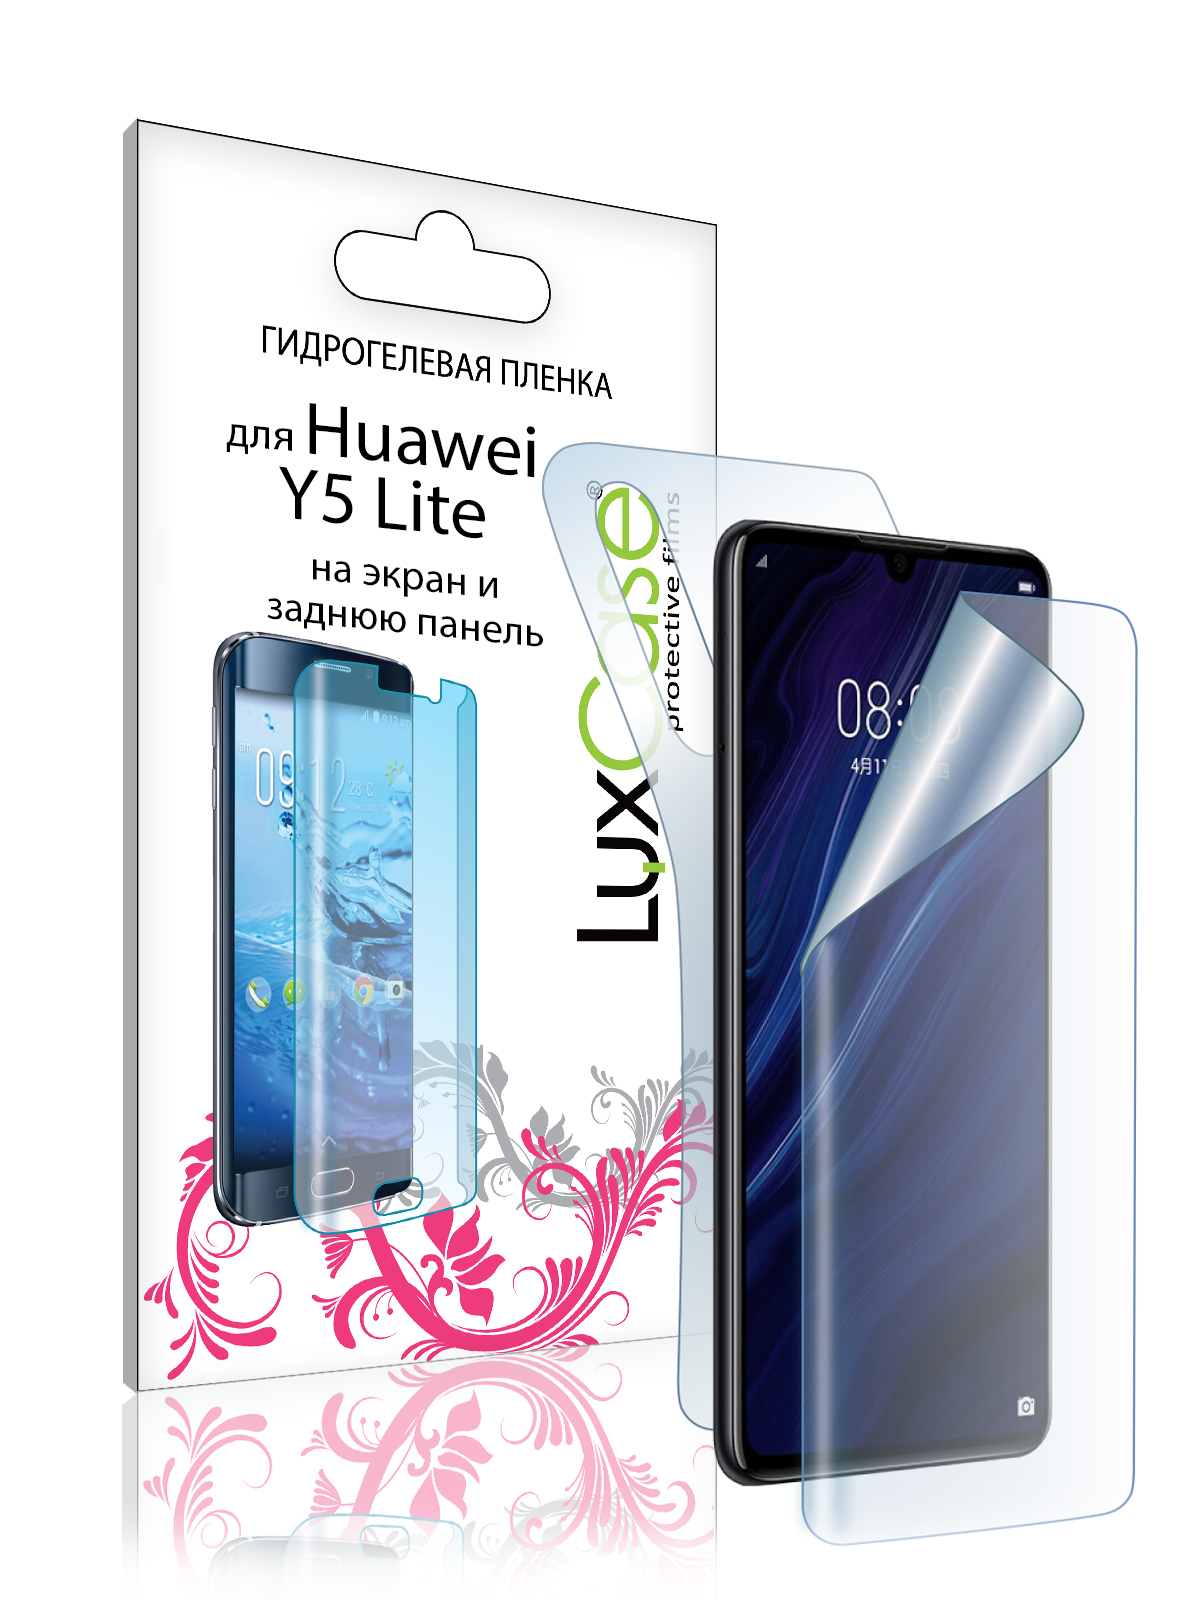 Пленка гидрогелевая LuxCase для Huawei Y5 Lite 0.14mm Front and Back Transperent Huawei Y5 Lite гидрогелевая пленка для huawei prime y5 y6 prime 2019 nova 2 lite защитная пленка для экрана honor 8x8 lite для honor 8c россия версия пленка